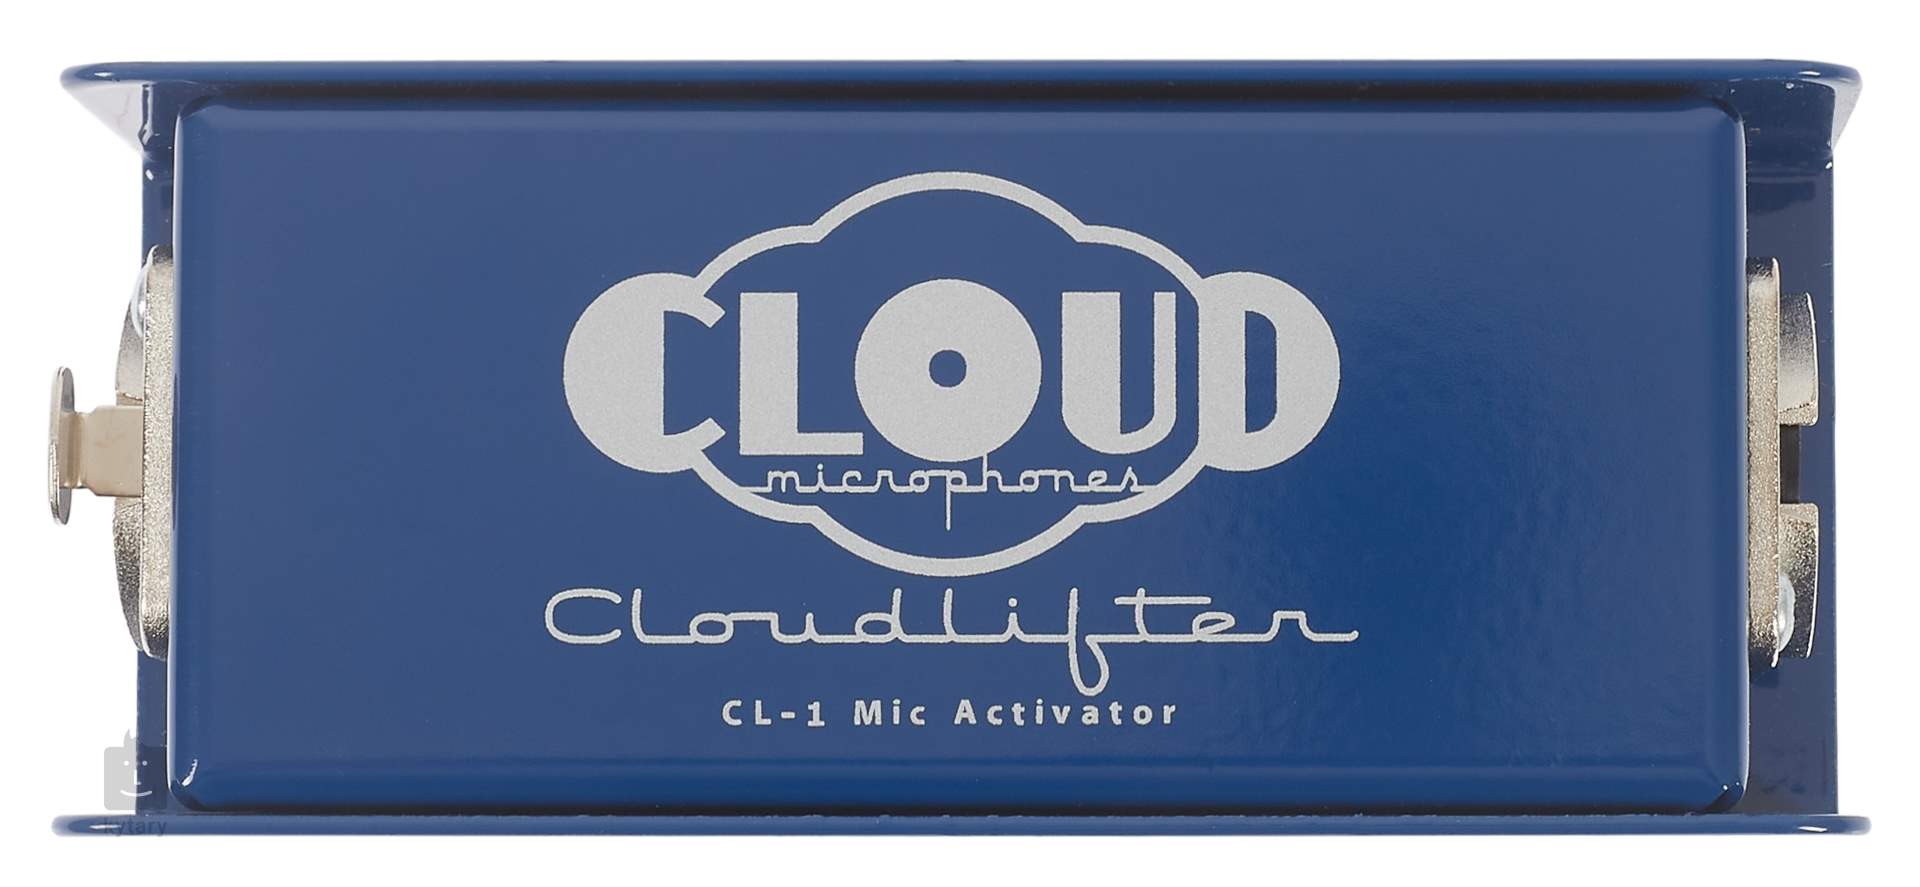 Cloudlifter CL-1 Mic Activator | nate-hospital.com